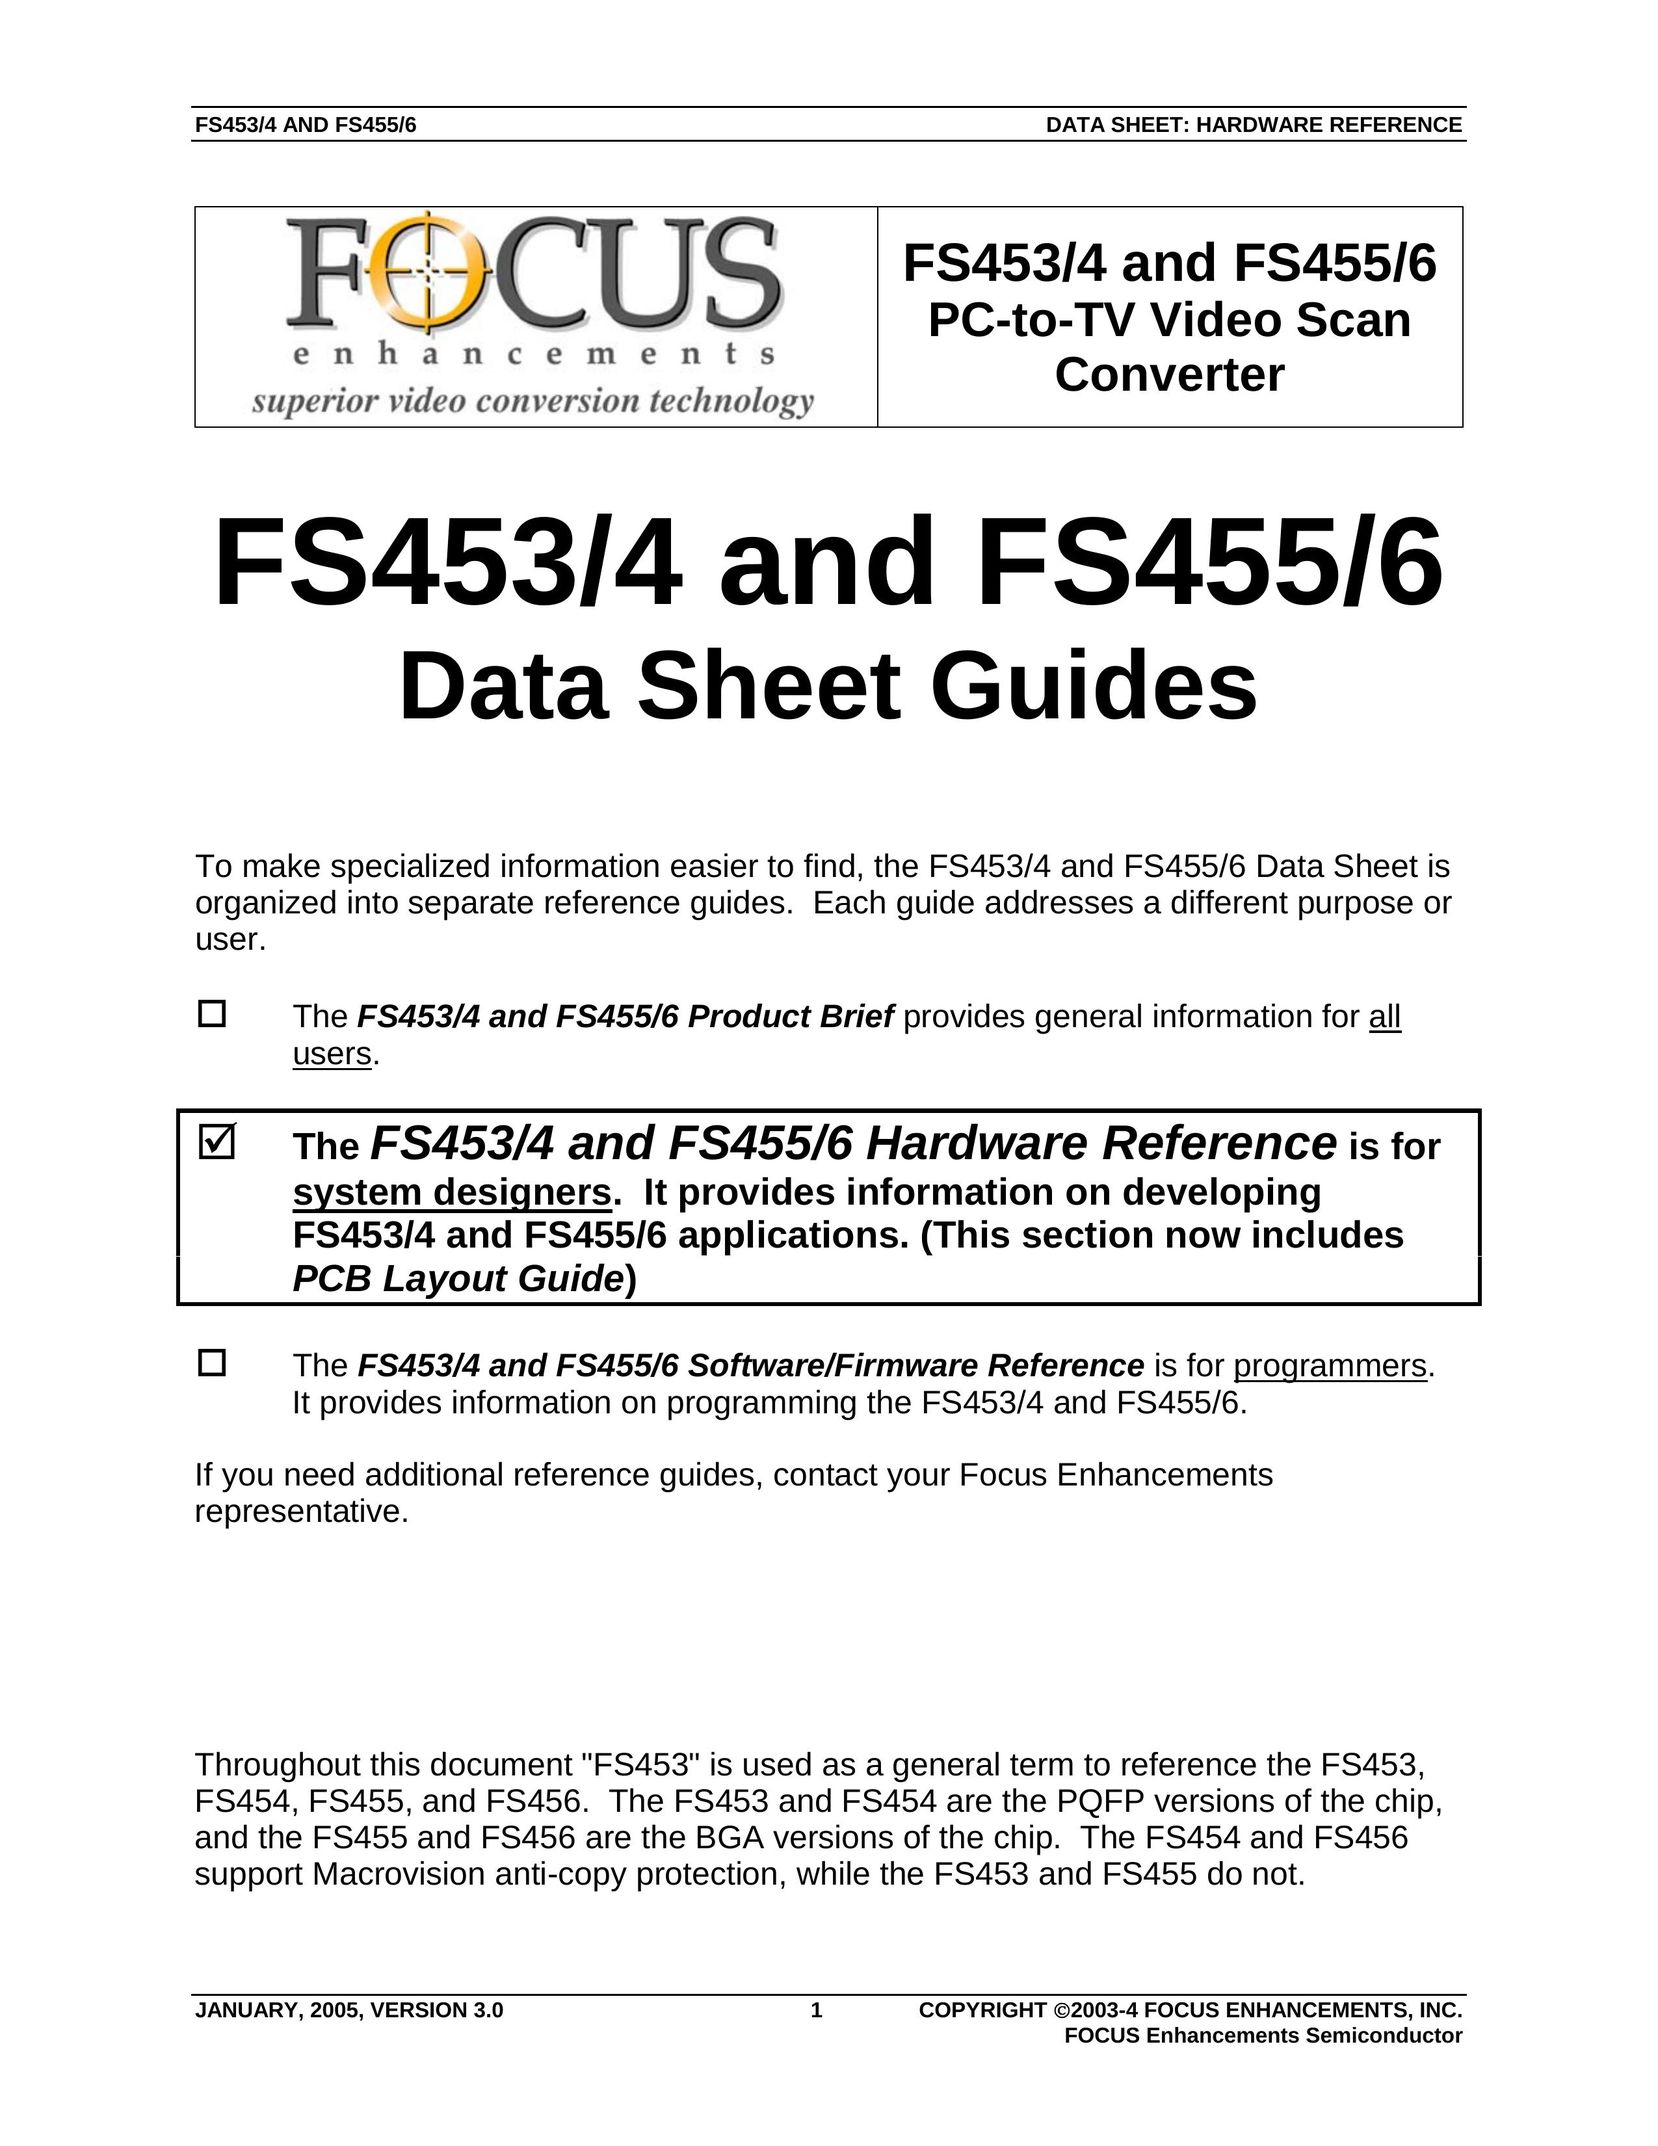 FOCUS Enhancements FS455 Network Router User Manual